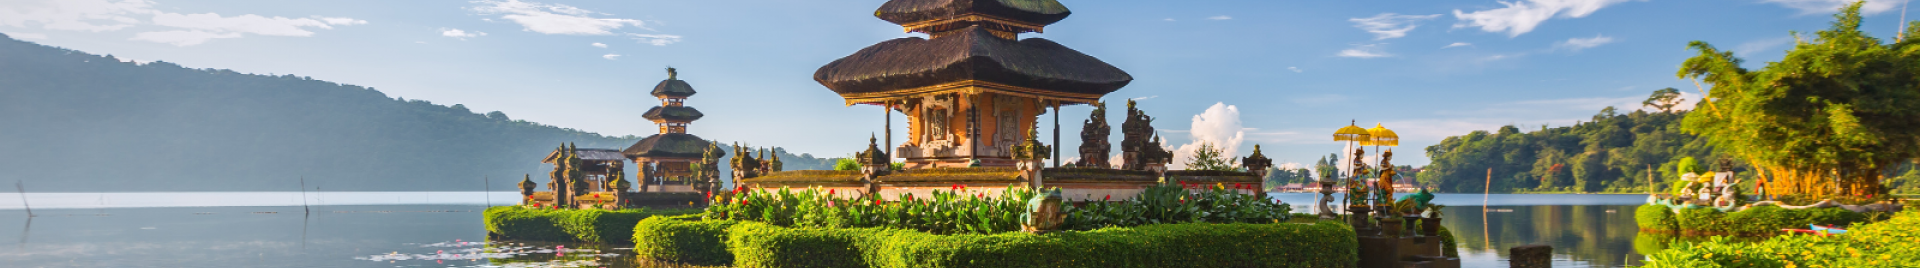 Bali,indonesia